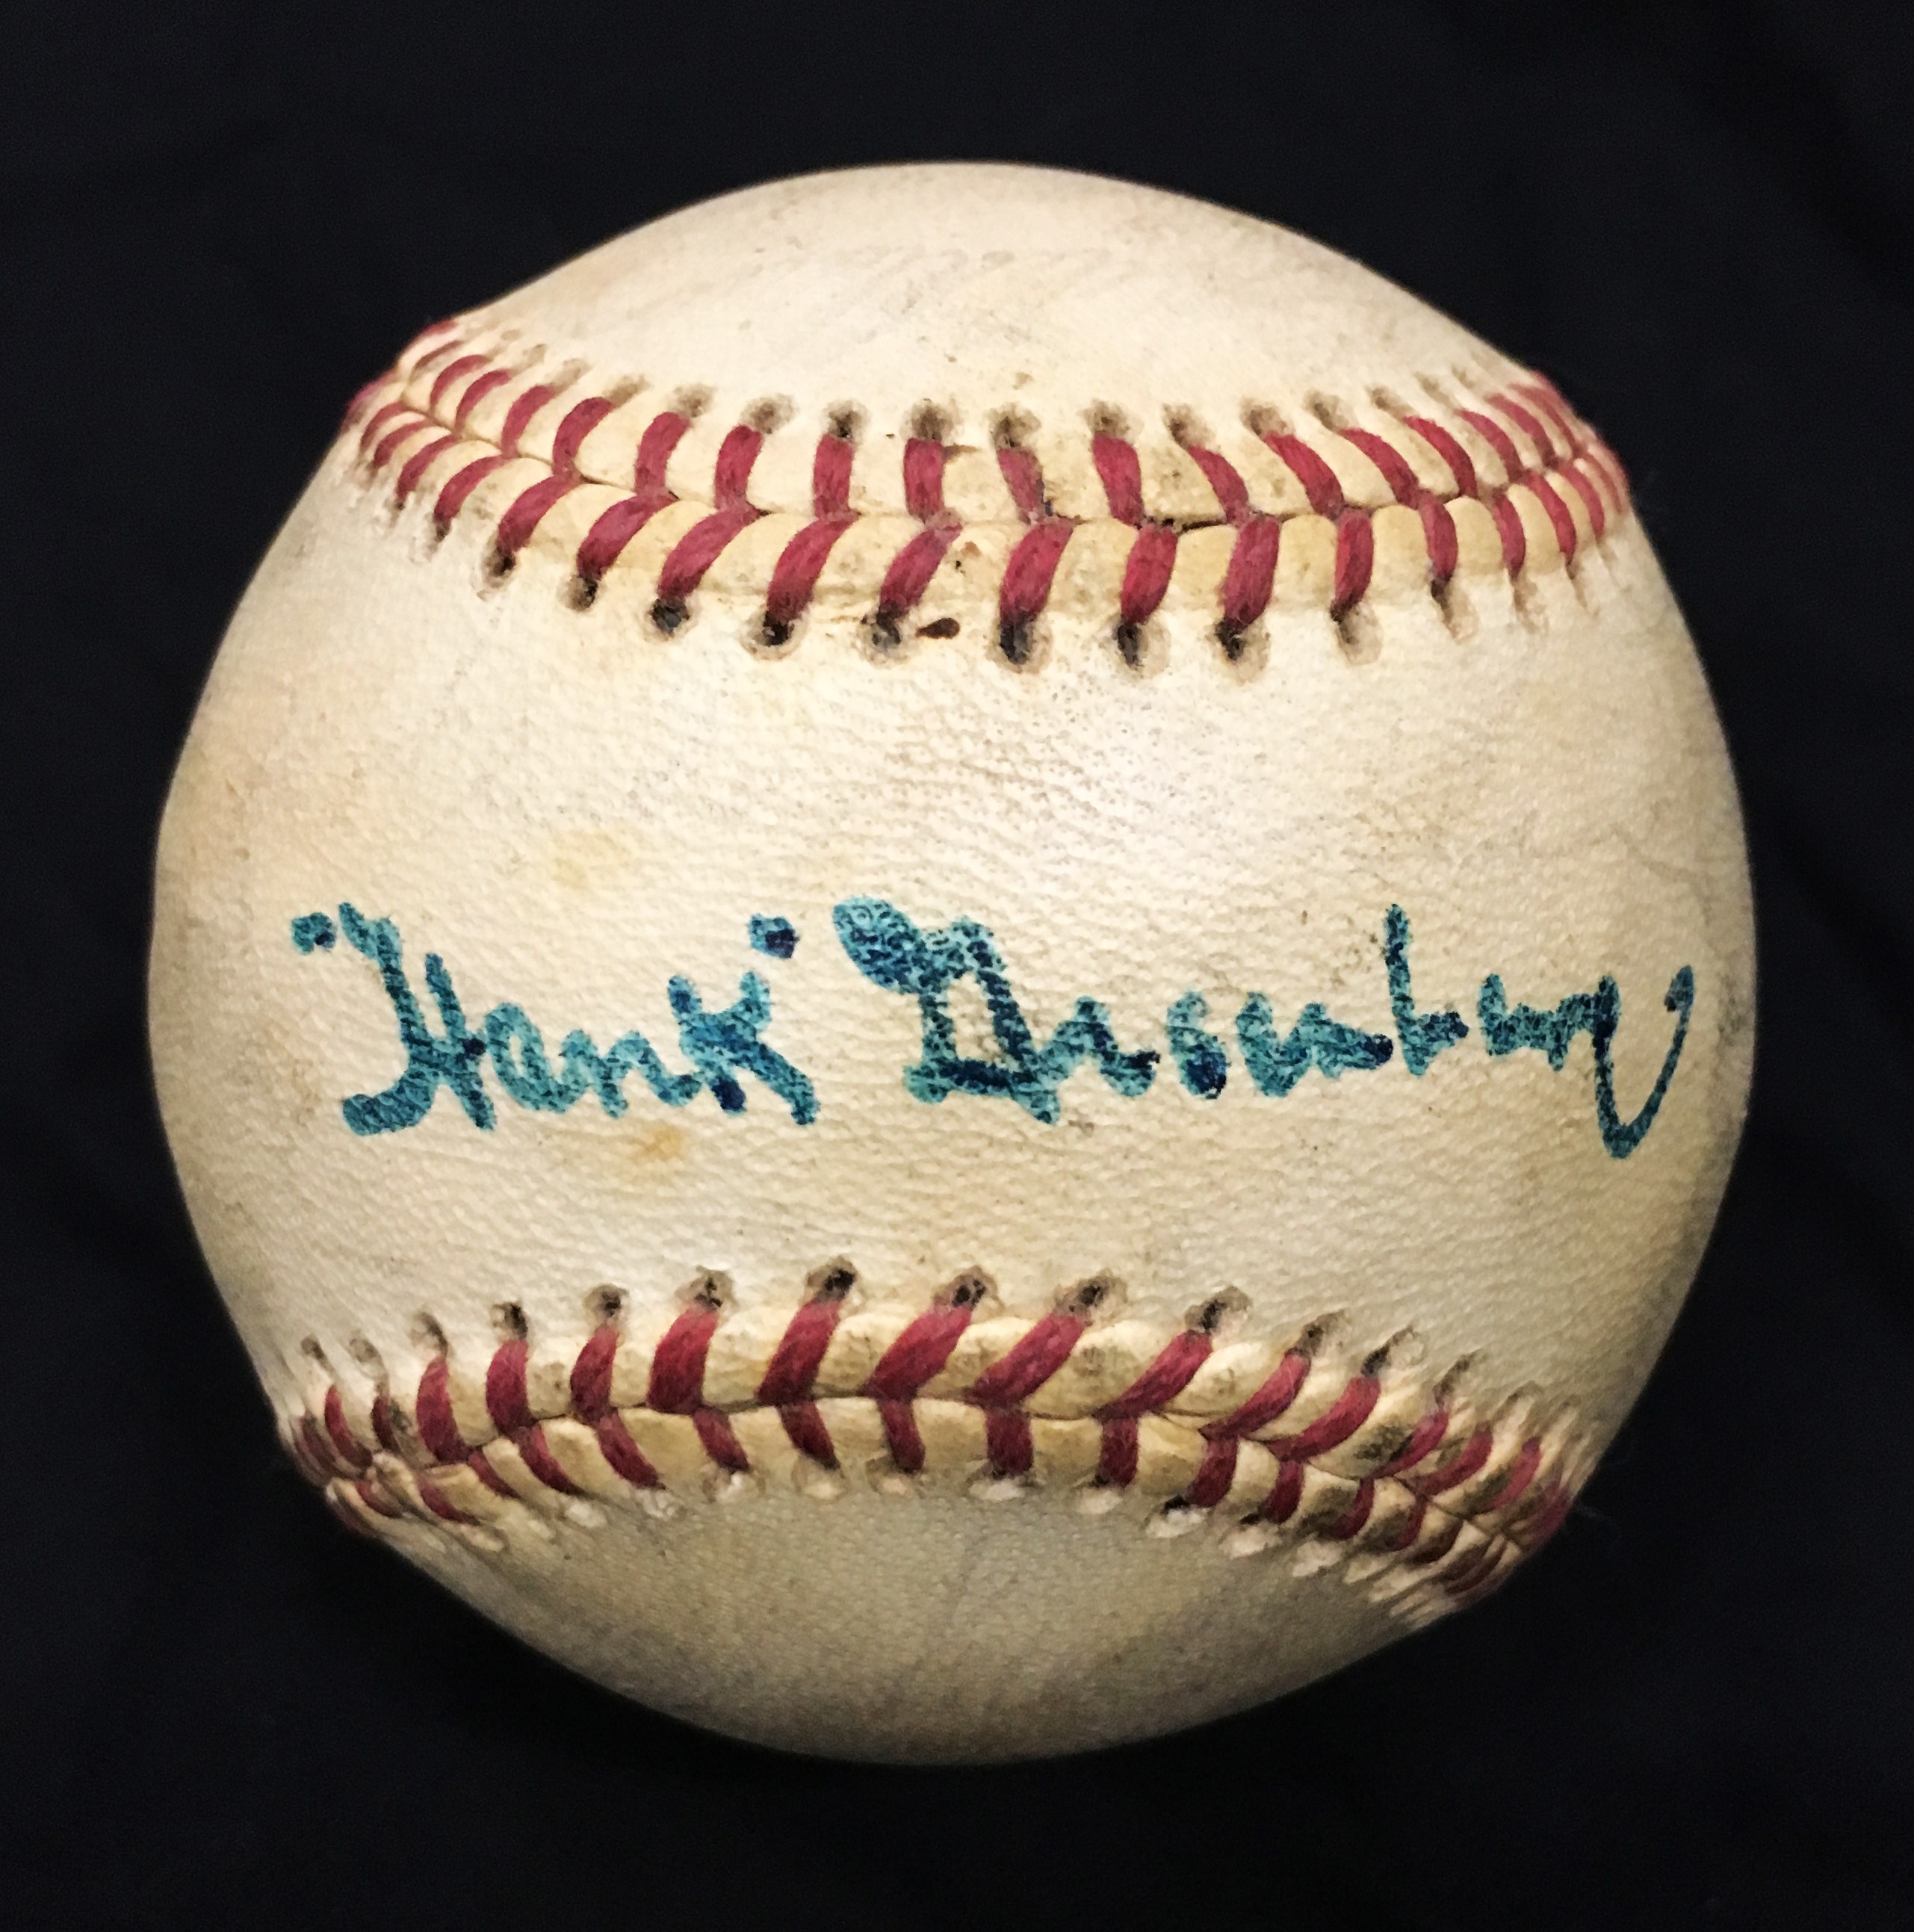 - 1981 Detroit Tigers Team Signed Baseball w/Hank Greenberg on Sweet Spot